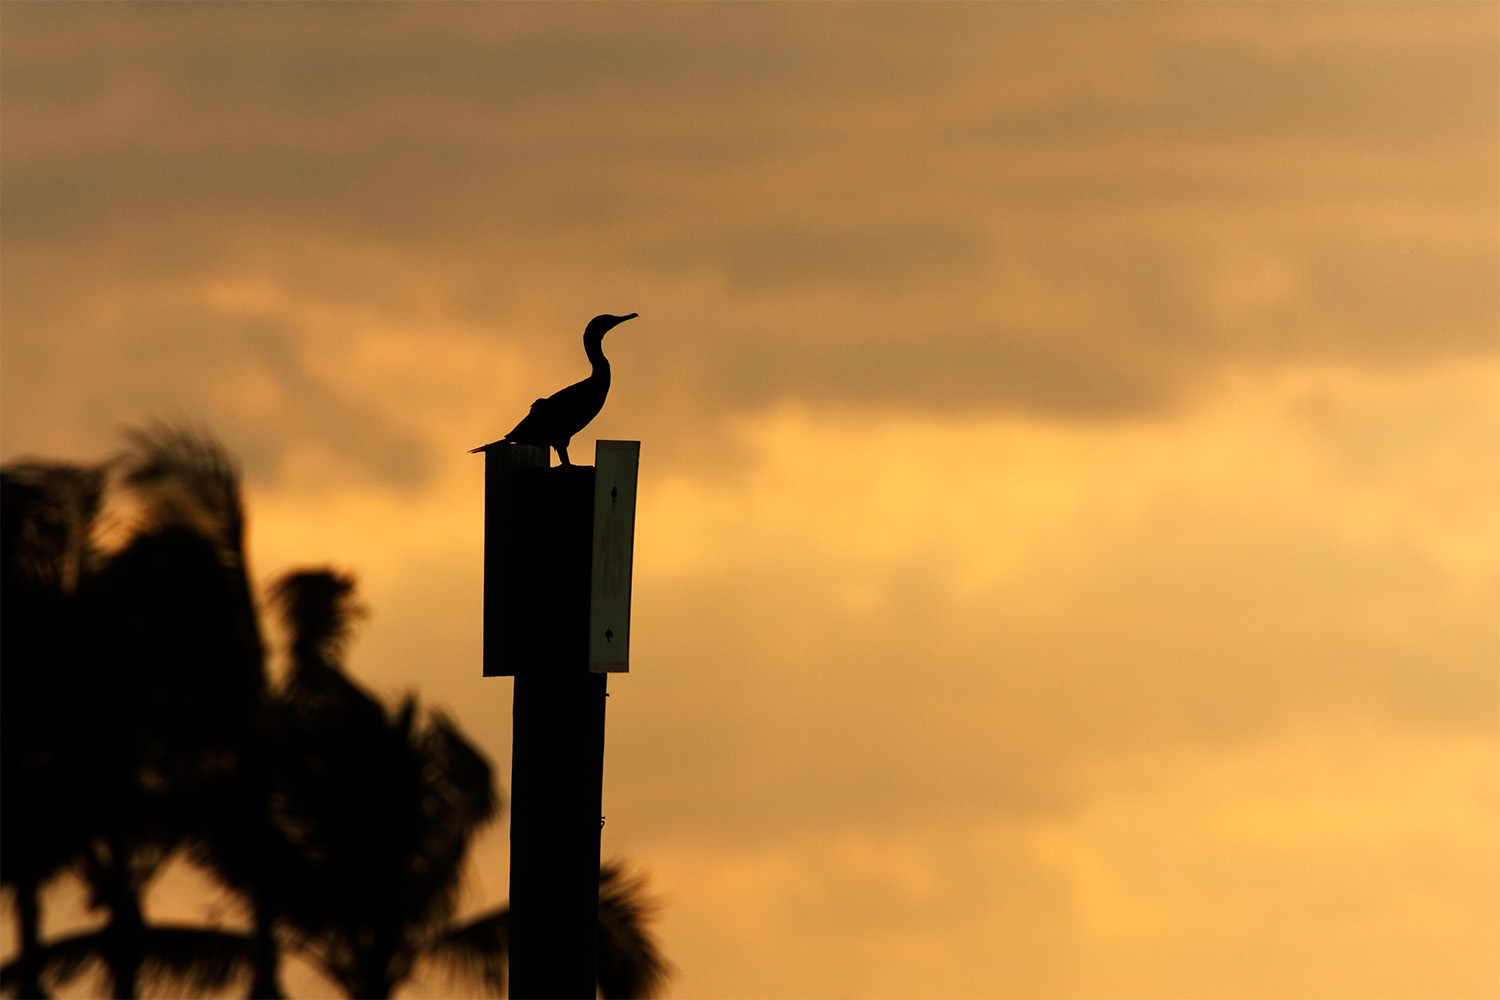 Double-crested cormorant (Phalacrocorax auritus) sitting on pole in sunset, Curry Hammock State Park, Florida, USA